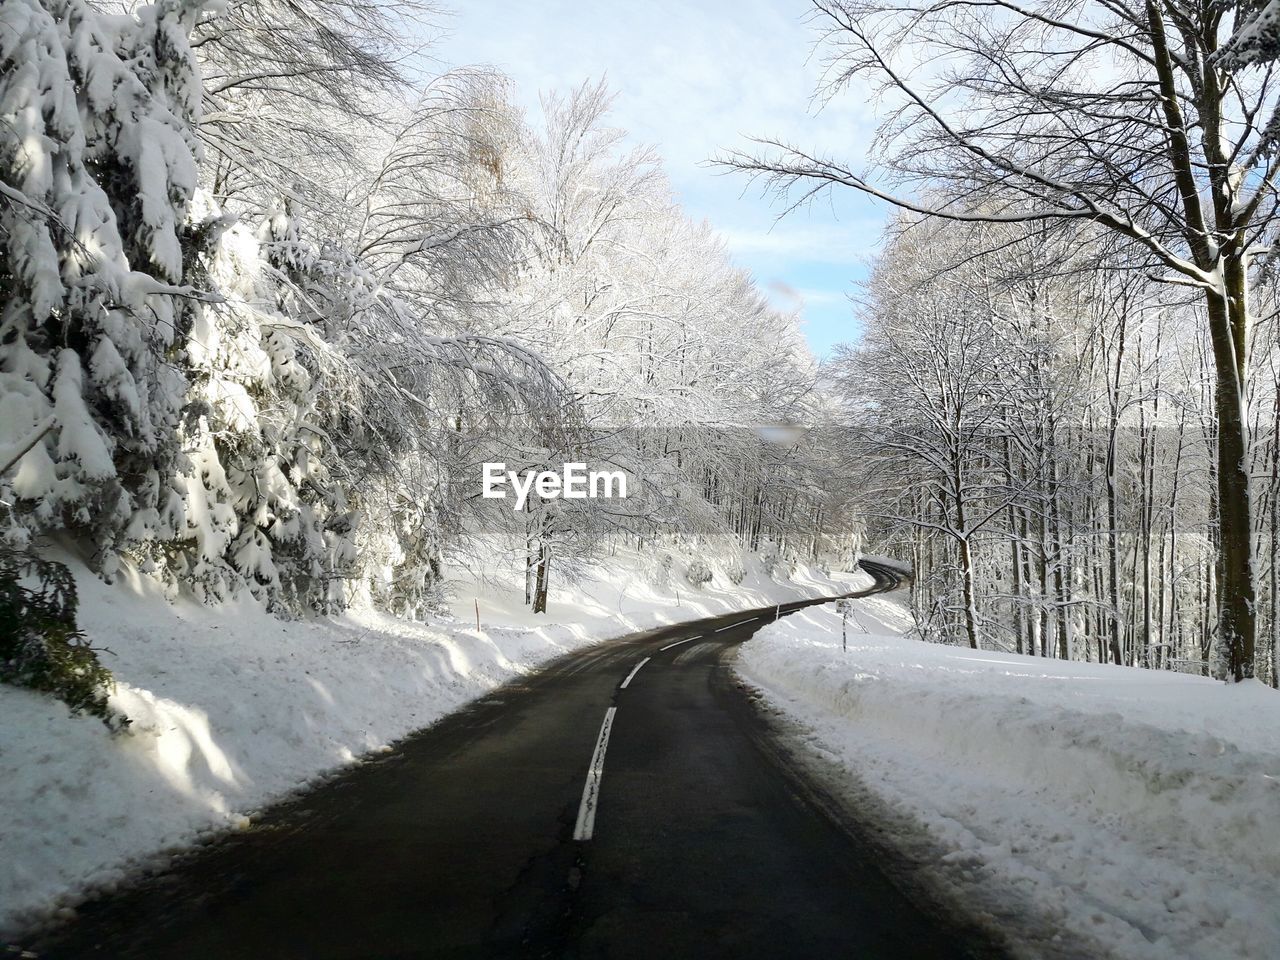 Road along trees in winter